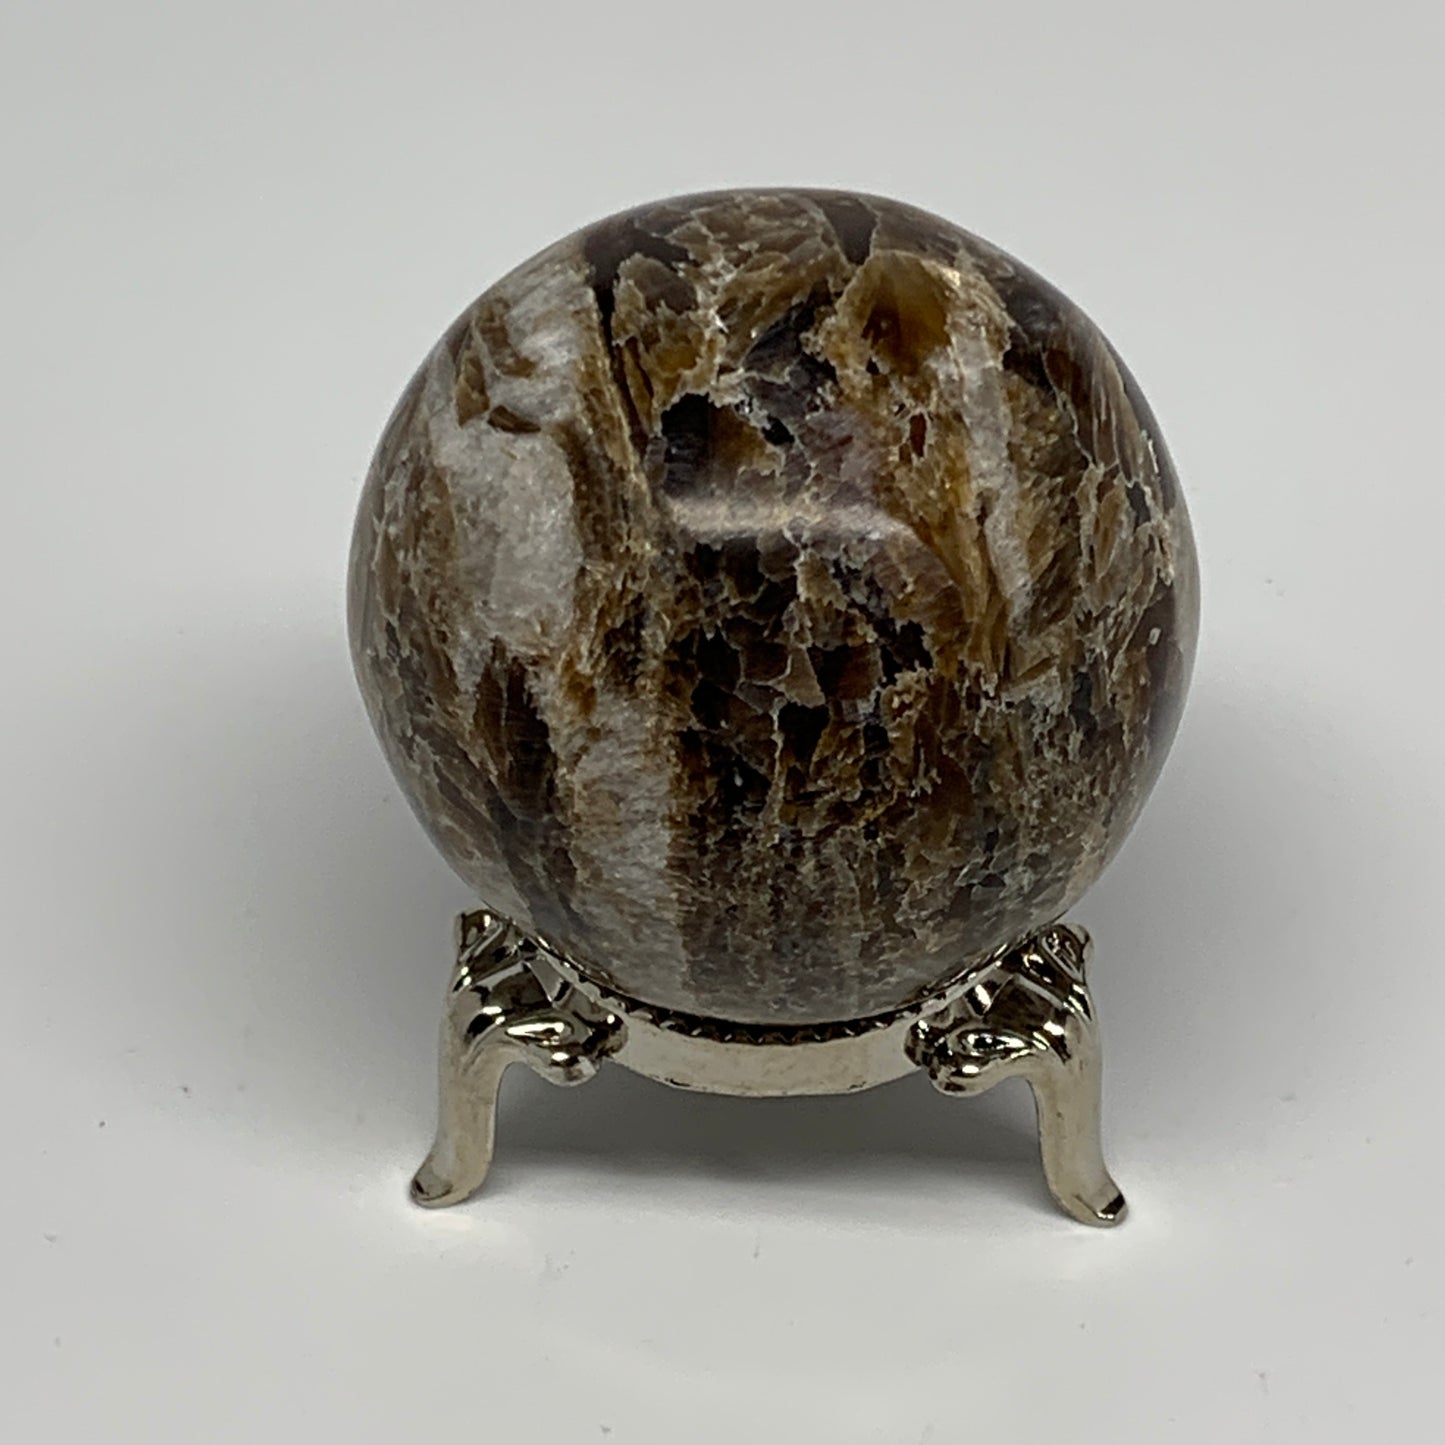 123.2g, 1.9" (47mm), Chocolate/Gray Onyx Sphere Ball Gemstone @Morocco, B18835